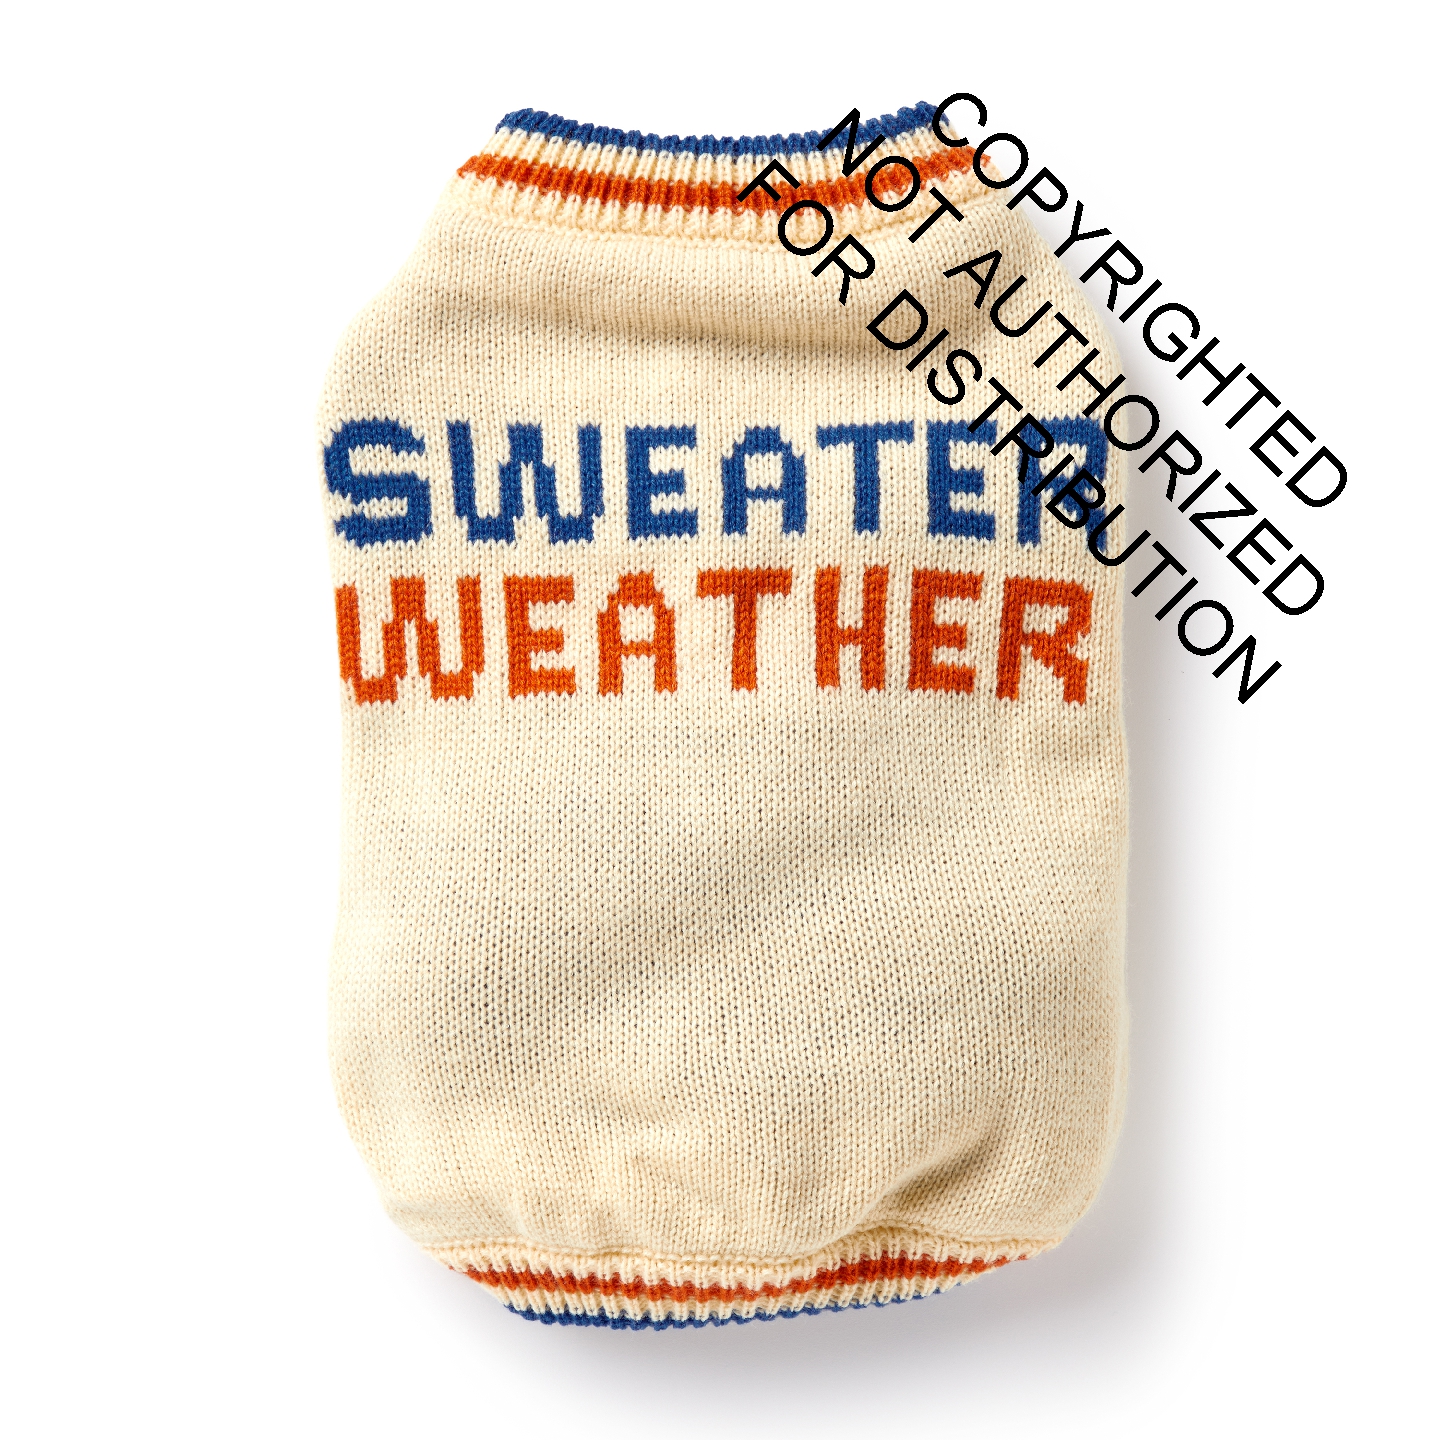 Sweater Weather - Dog Sweater (Small)